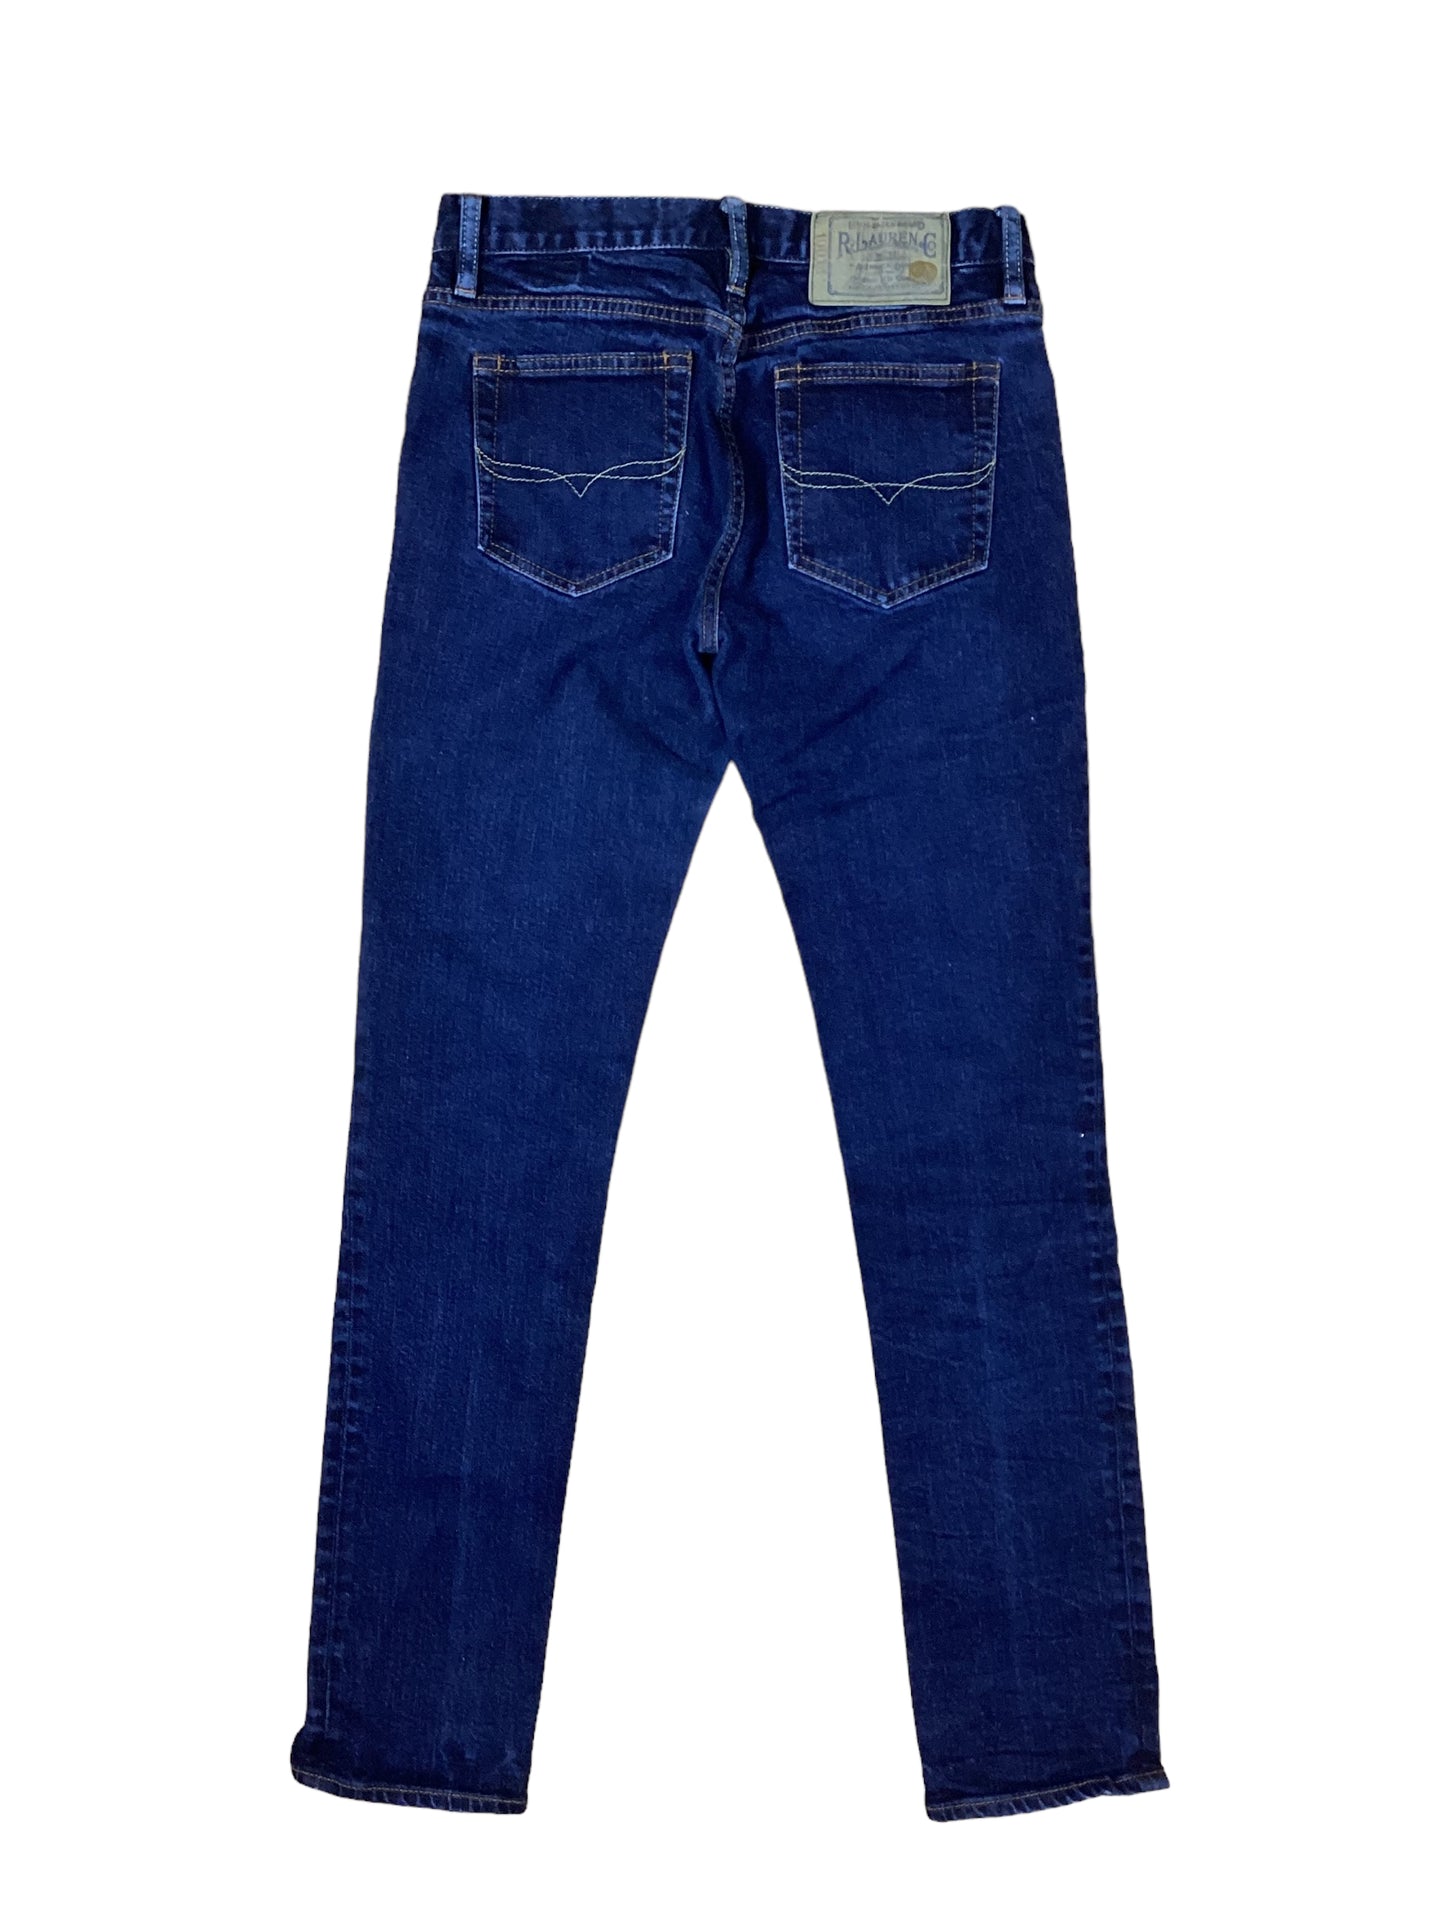 Jeans Skinny By Ralph Lauren Blue Label  Size: 6